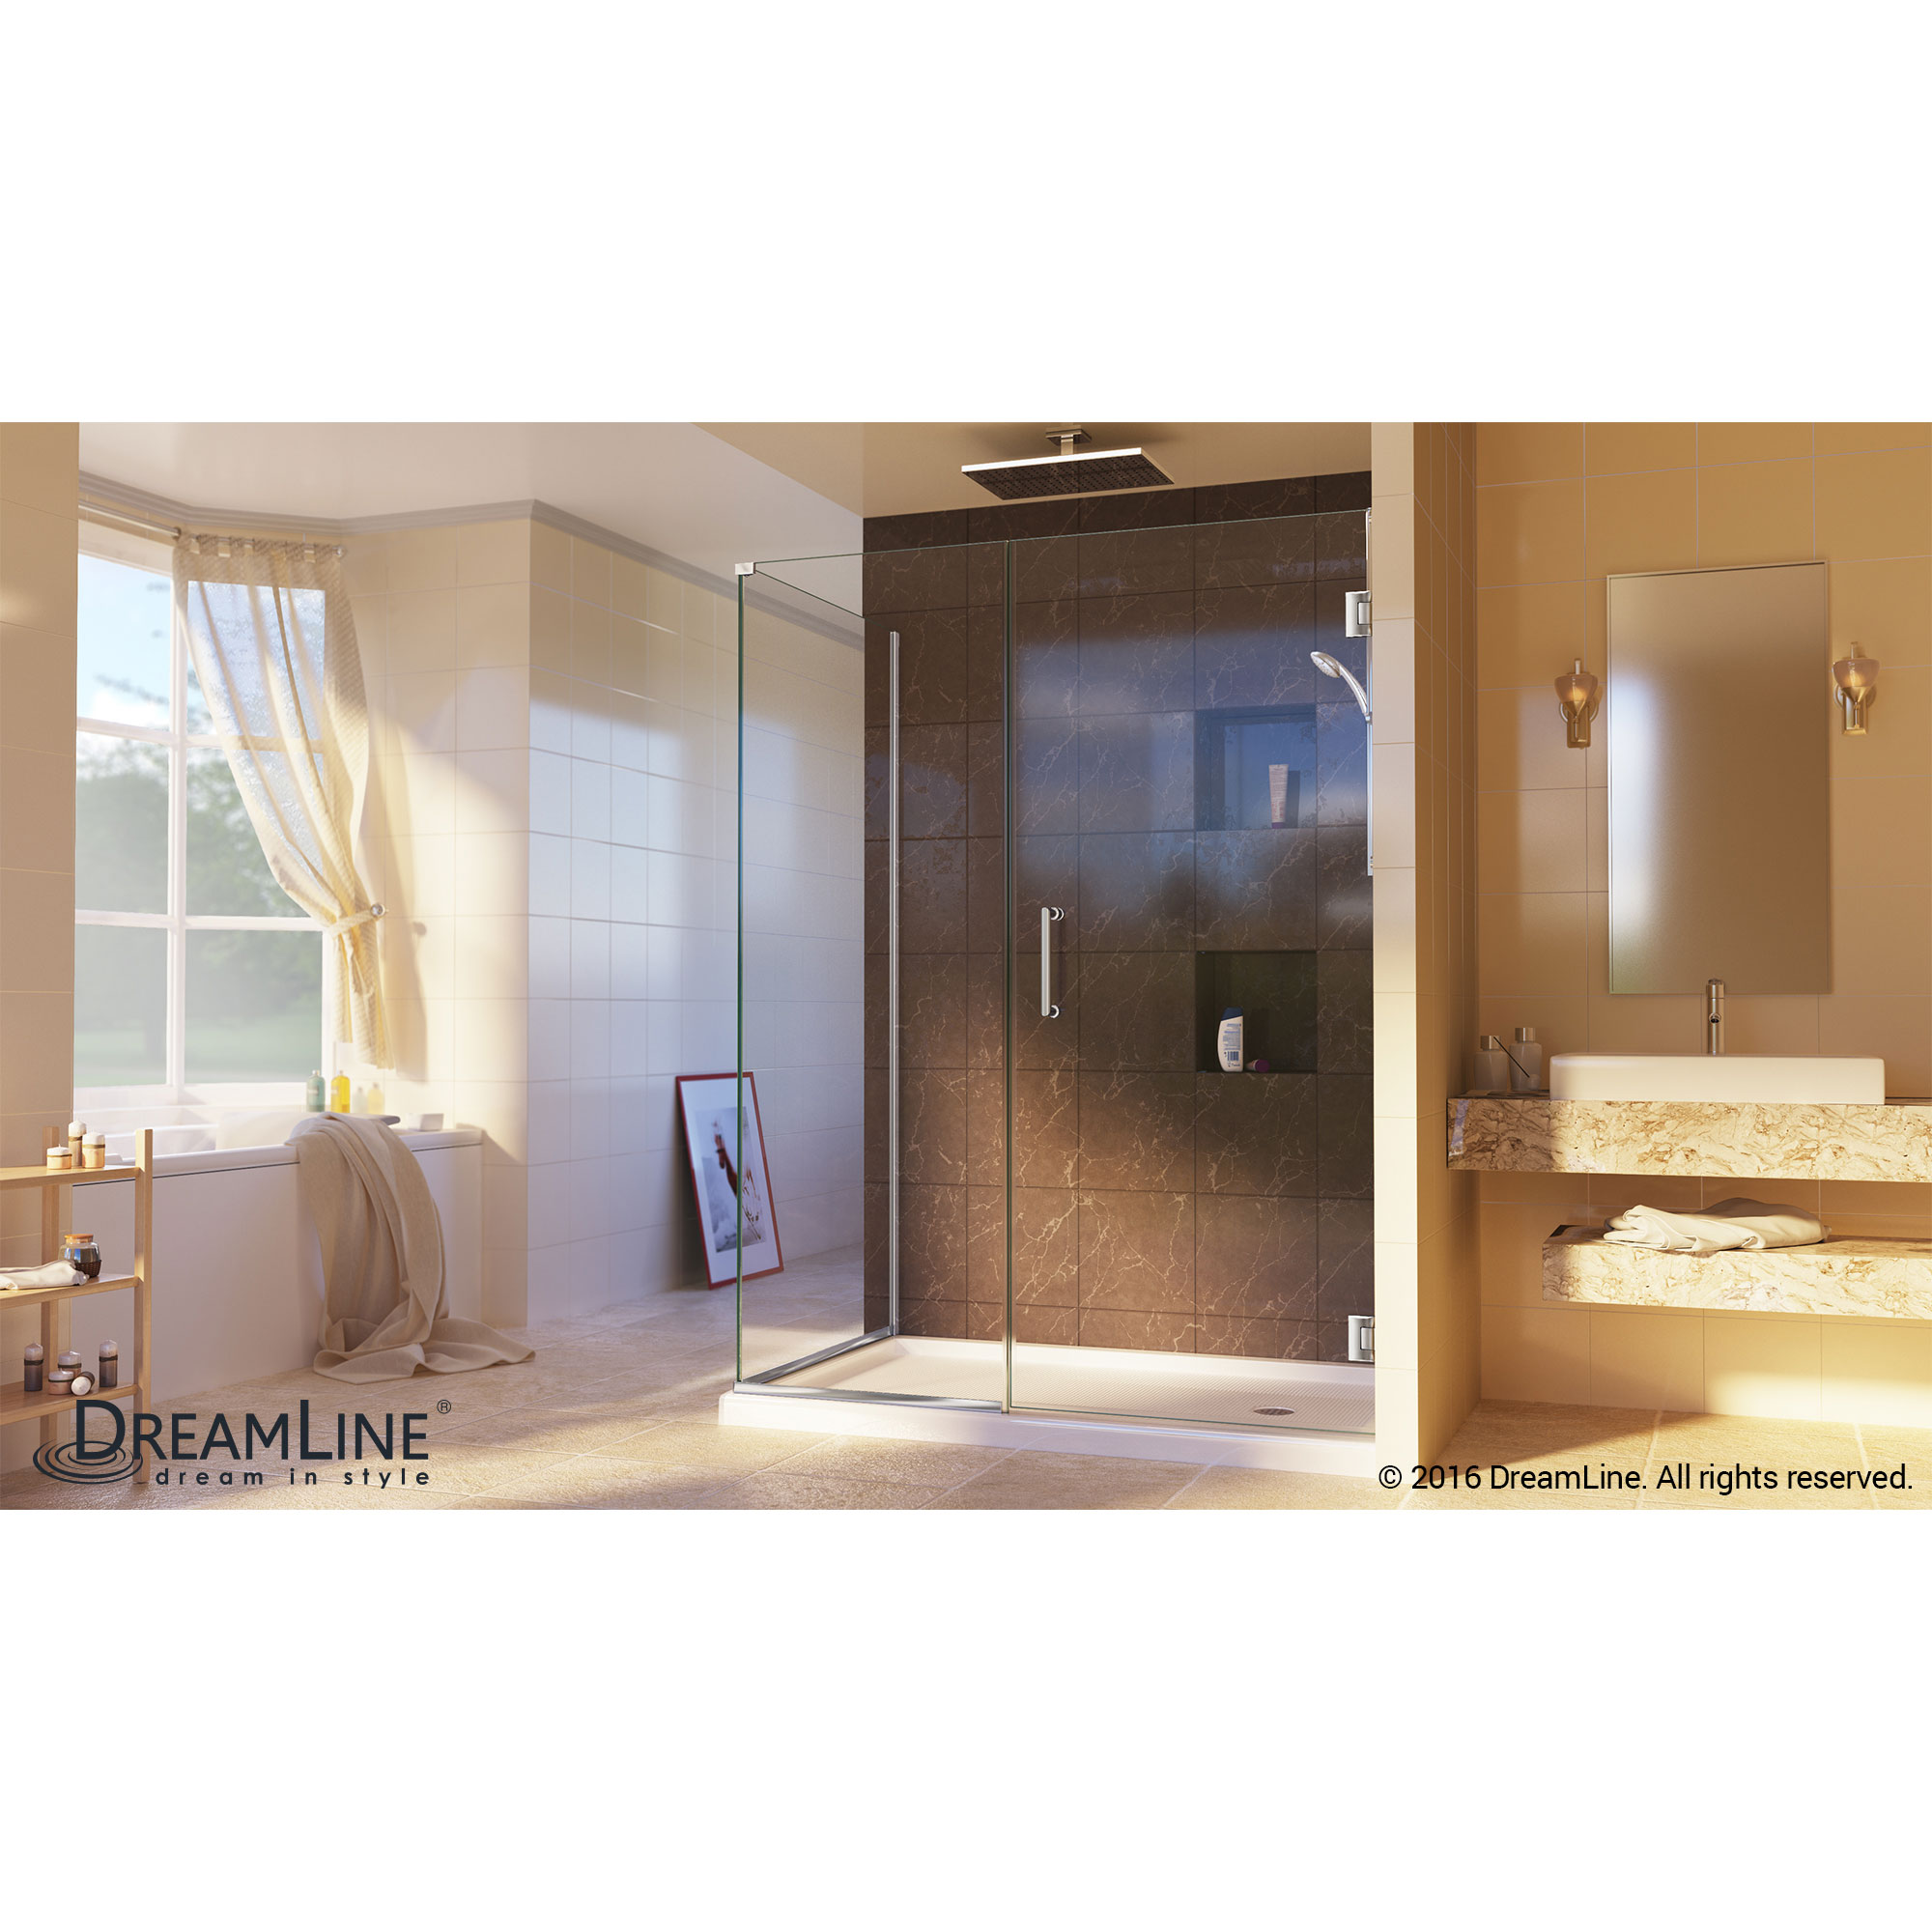 DreamLine SHEN-24320340-01 Unidoor Plus Hinged Shower Enclosure In Chrome Finish Hardware